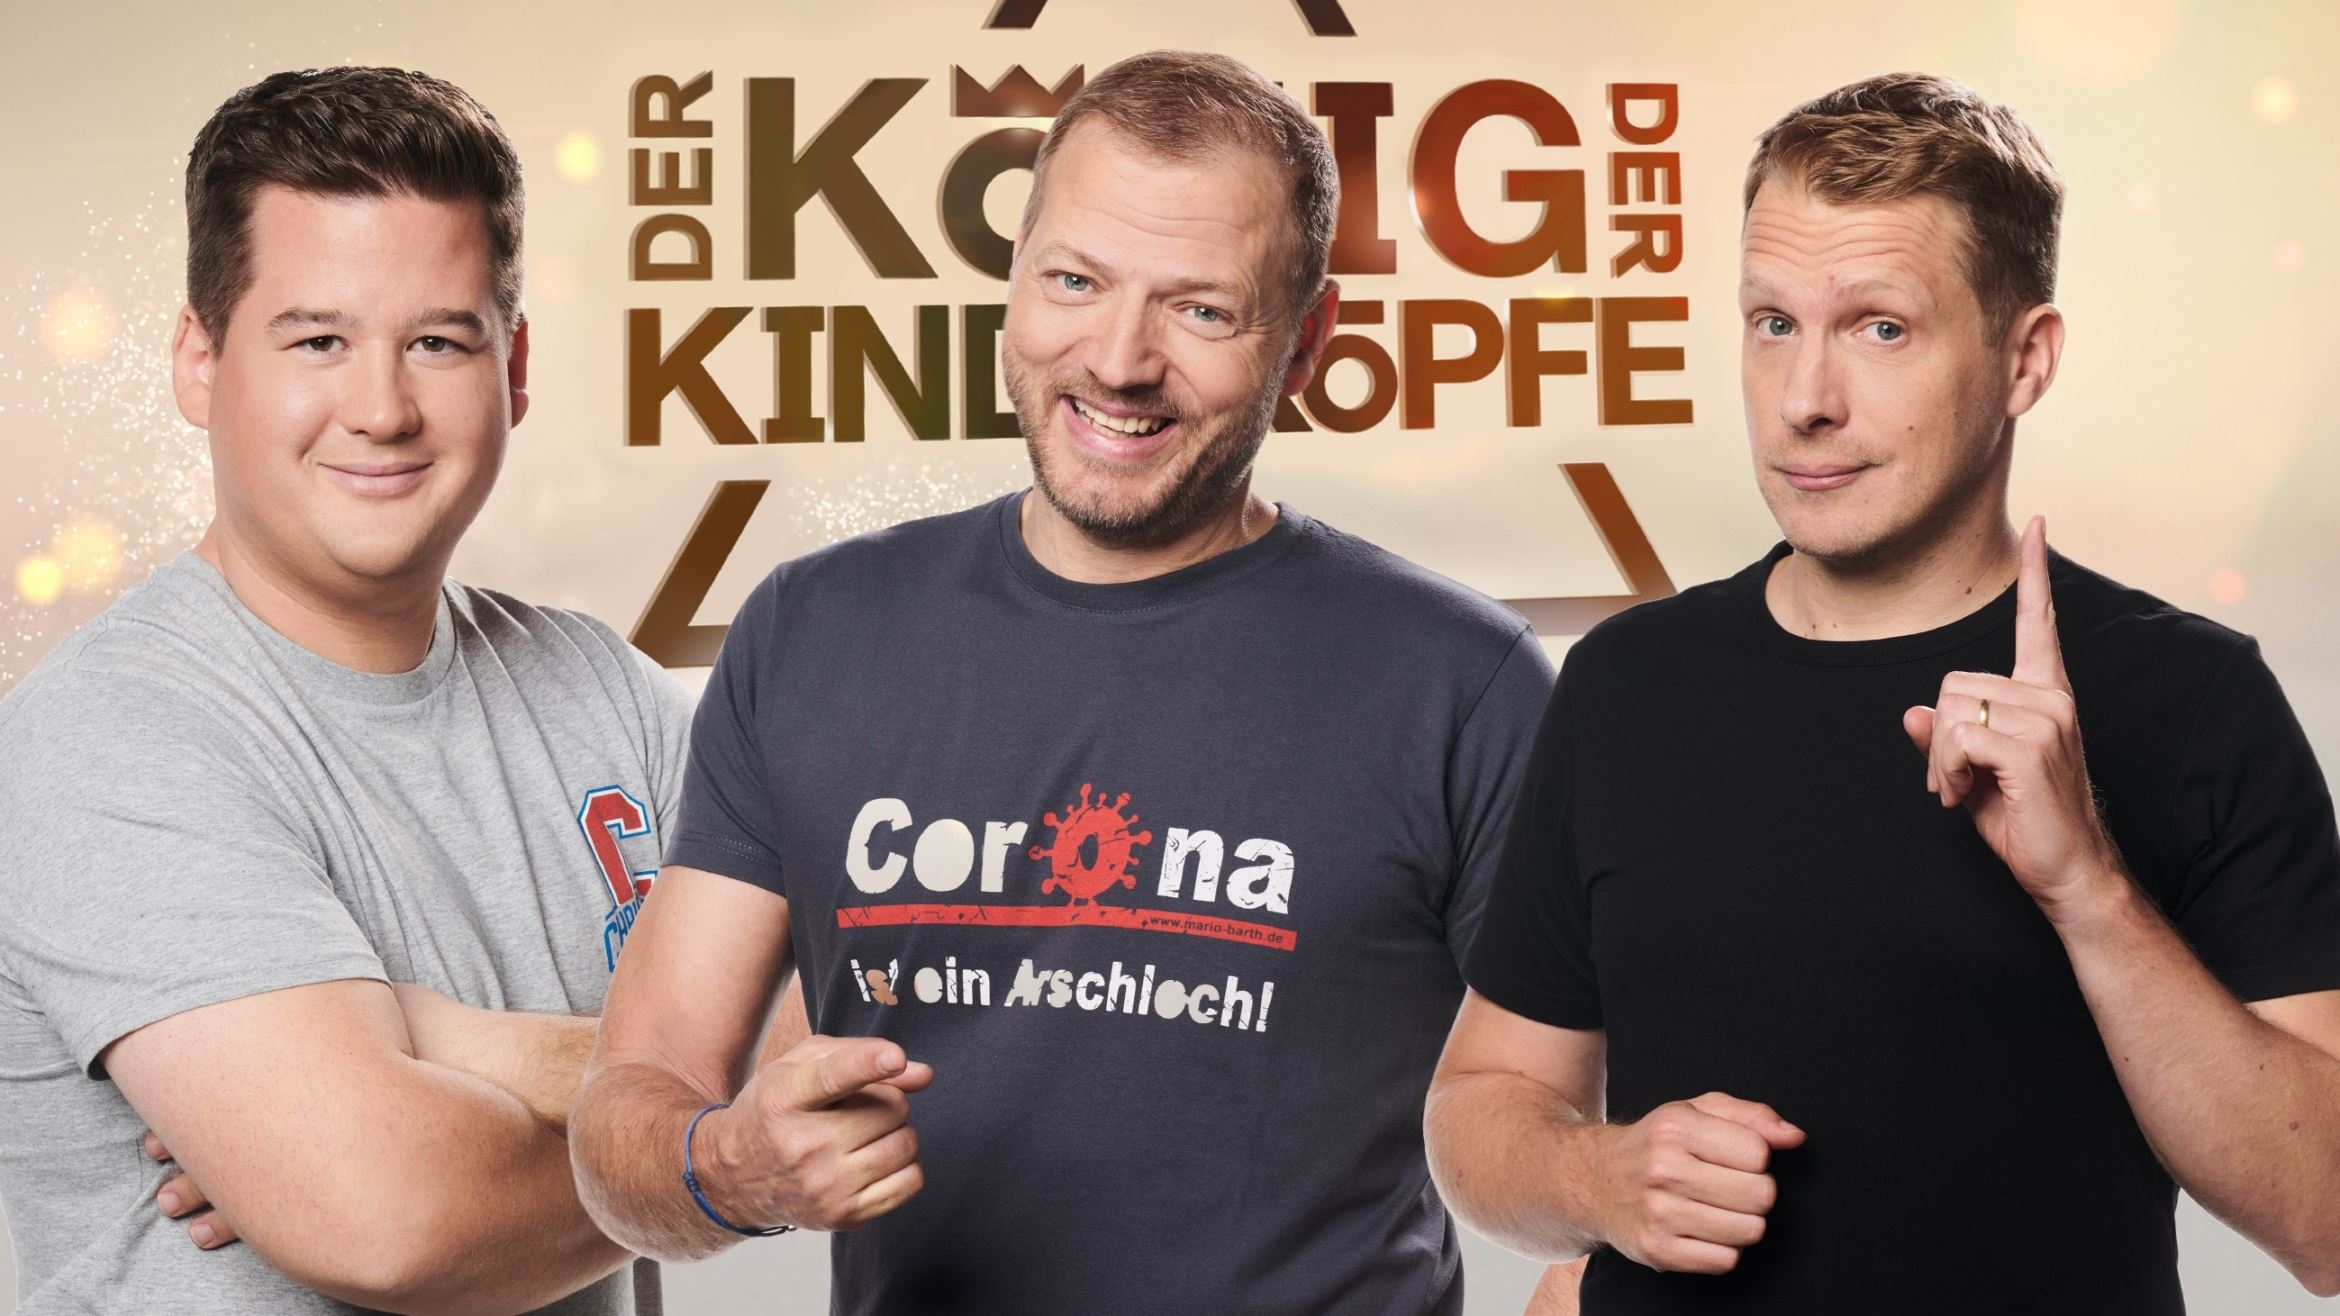 RTL-Show "Der König der Kindsköpfe" mit Chris Tall, Mario Barth und Oliver Pocher (v.l.n.r.) - 